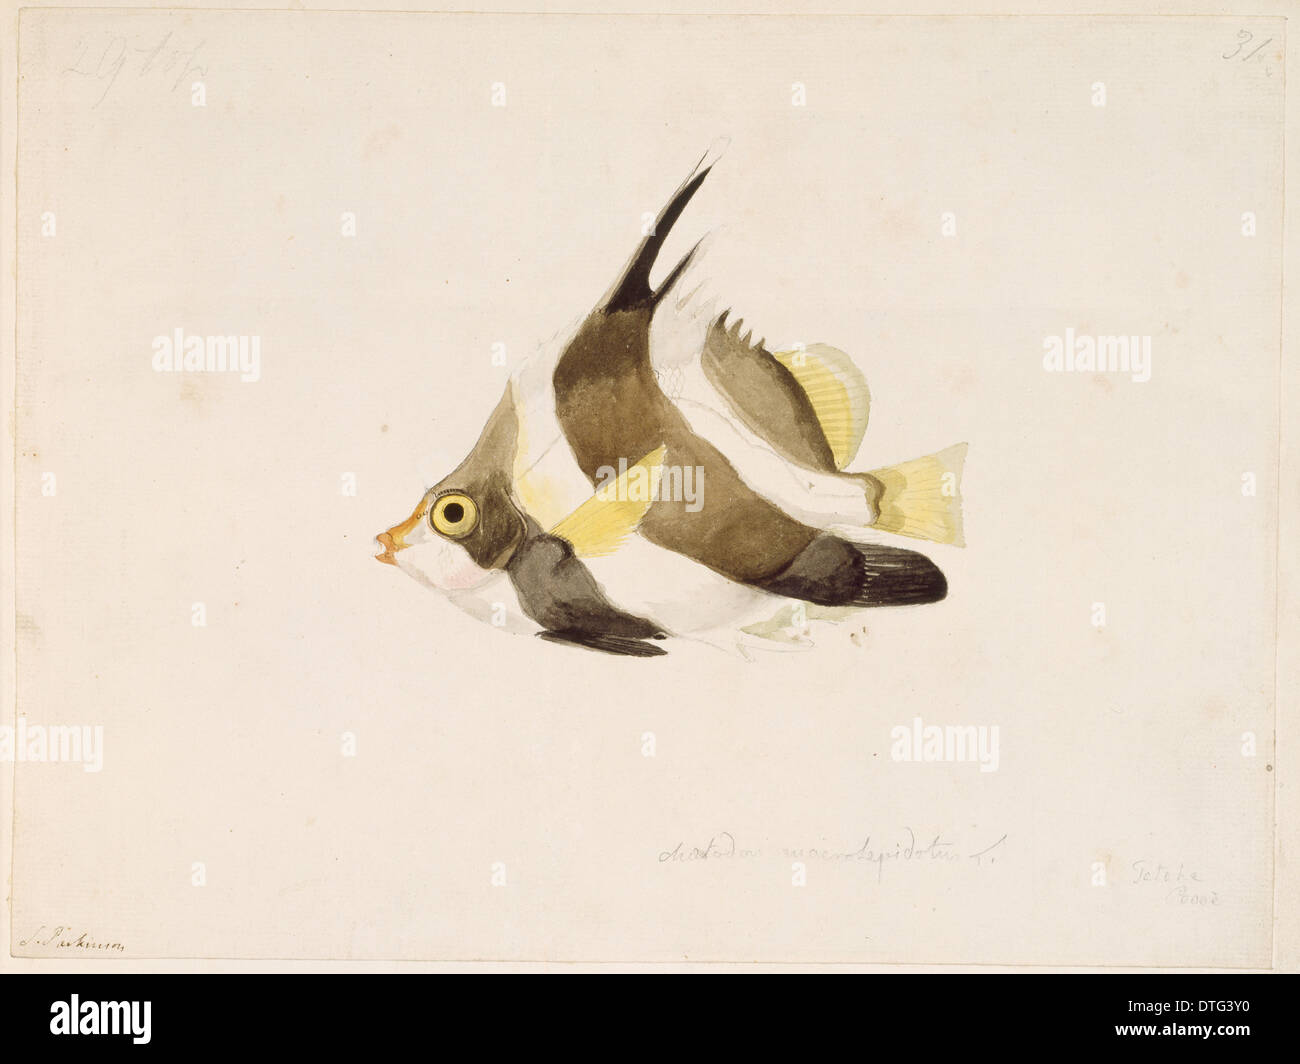 Heniochus chryostomus, pennant bannerfish Stock Photo